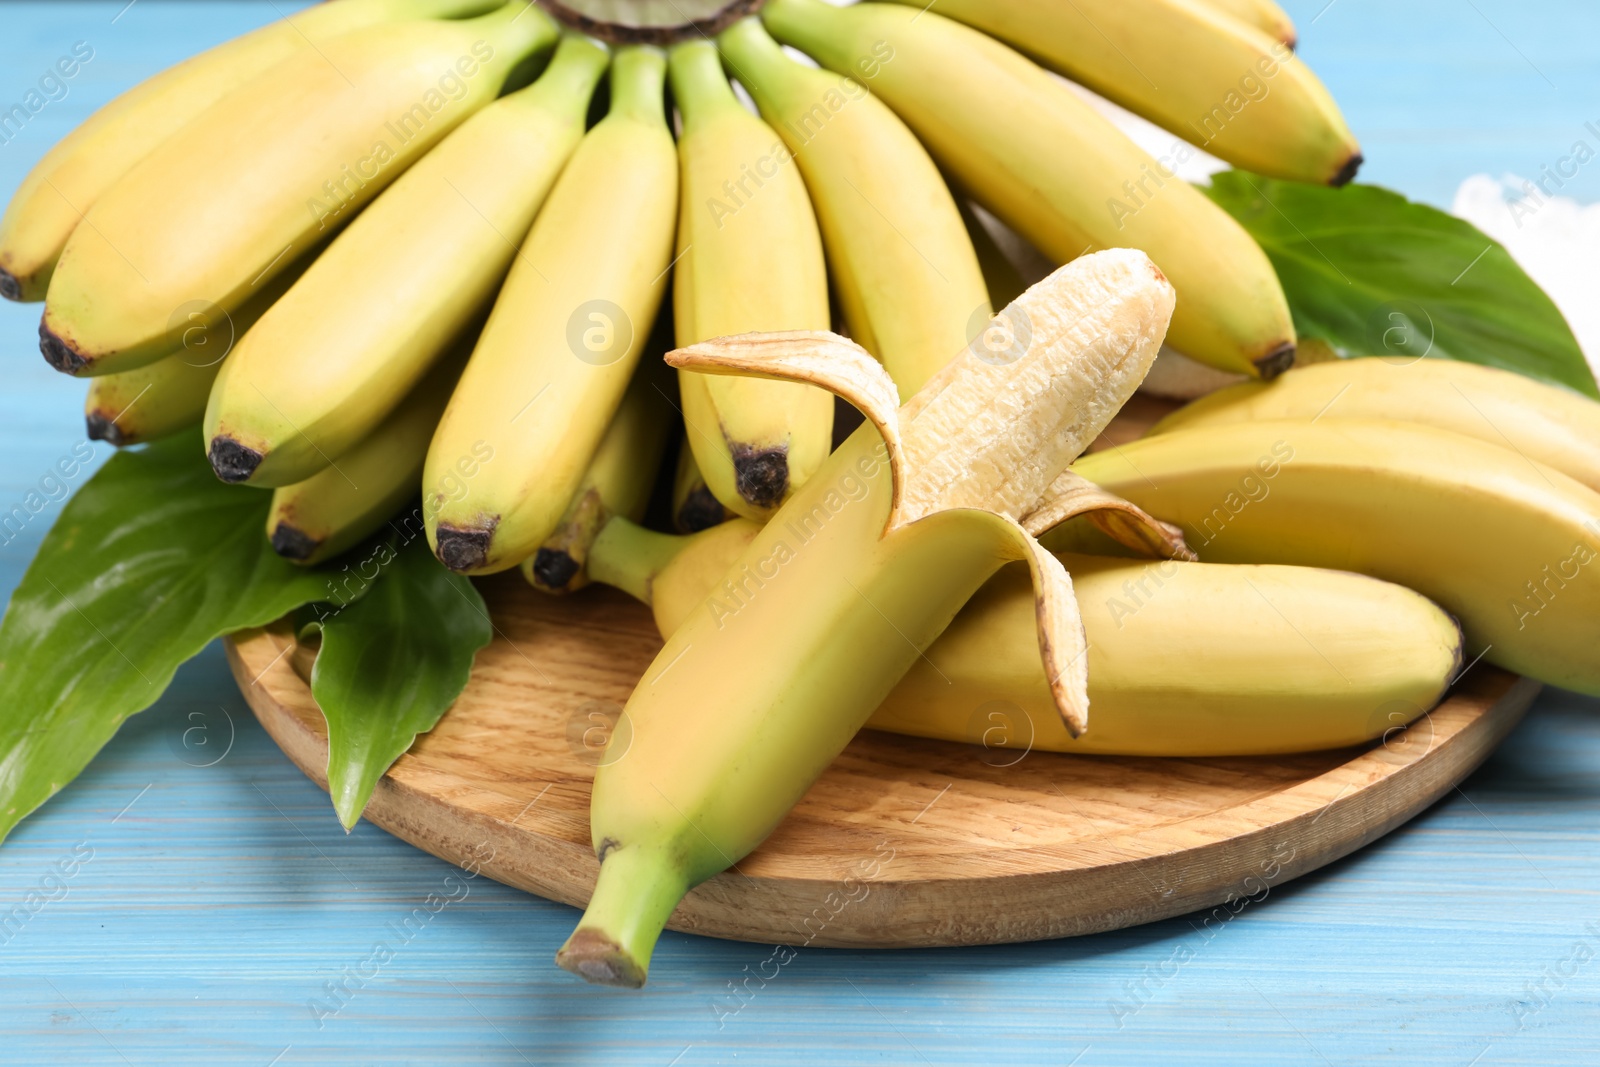 Photo of Tasty ripe baby bananas on light blue wooden table